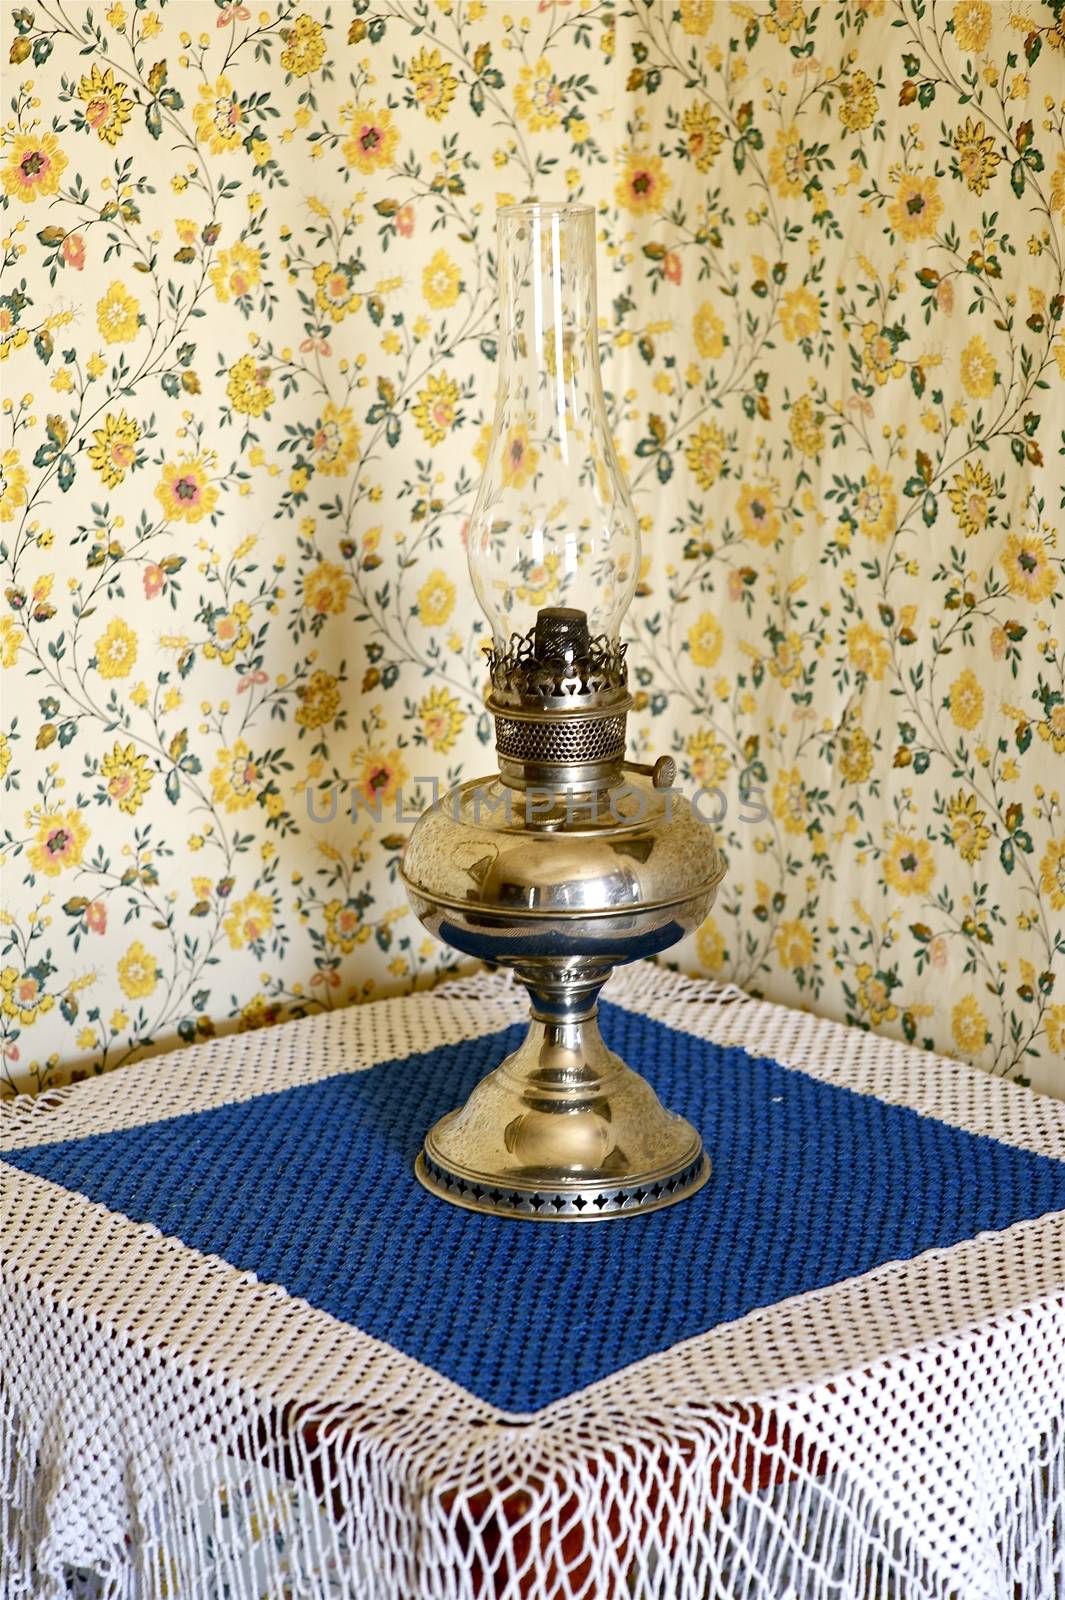 Vintage Oil Lamp on the Vintage Home Interior Table. Vintage Oil Lamp Lighting.